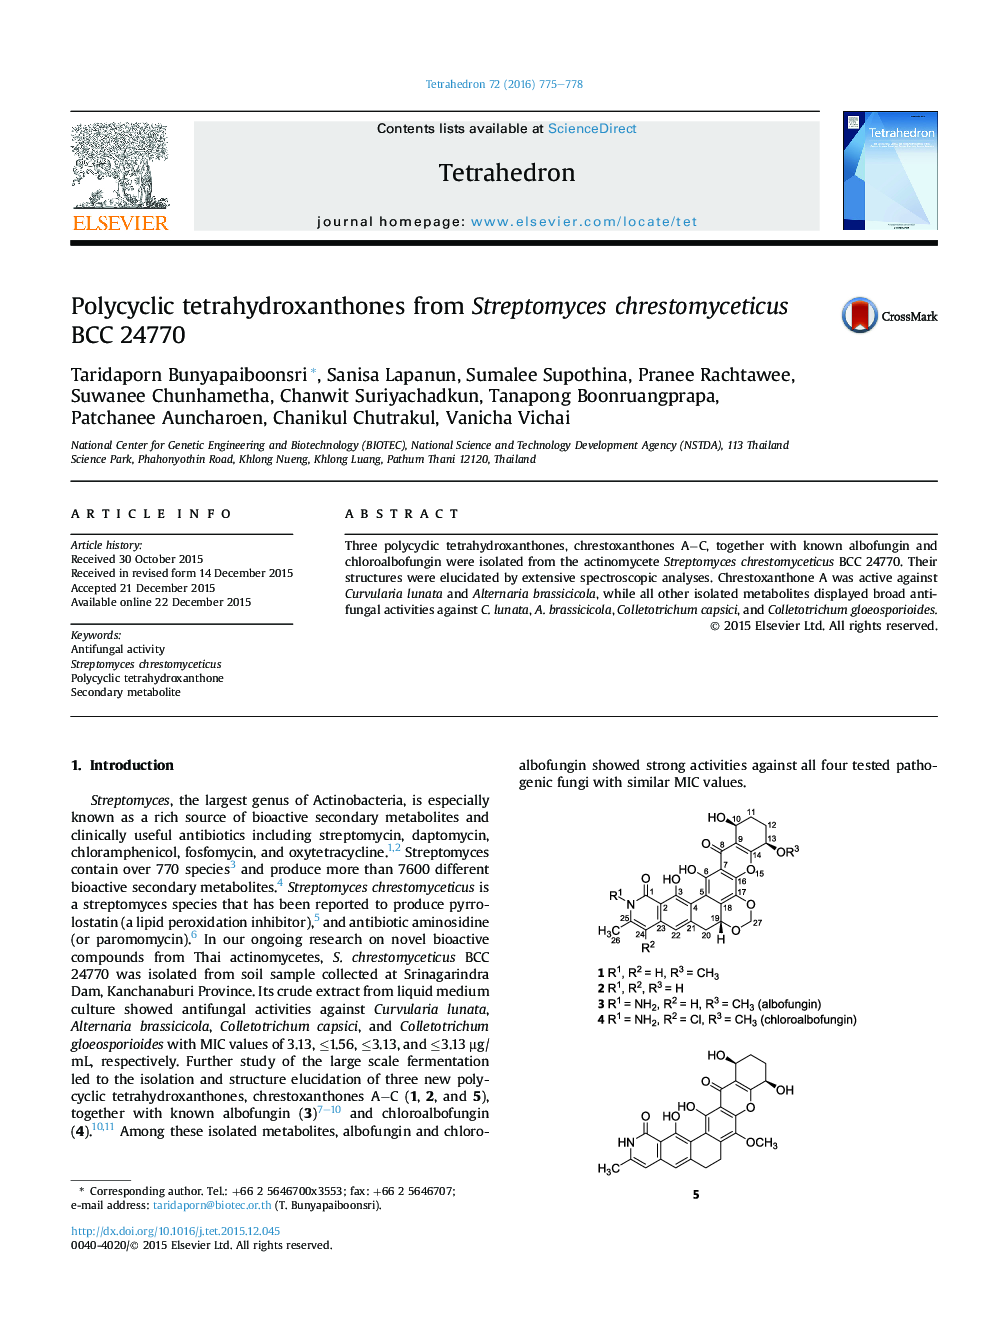 Polycyclic tetrahydroxanthones from Streptomyces chrestomyceticus BCC 24770